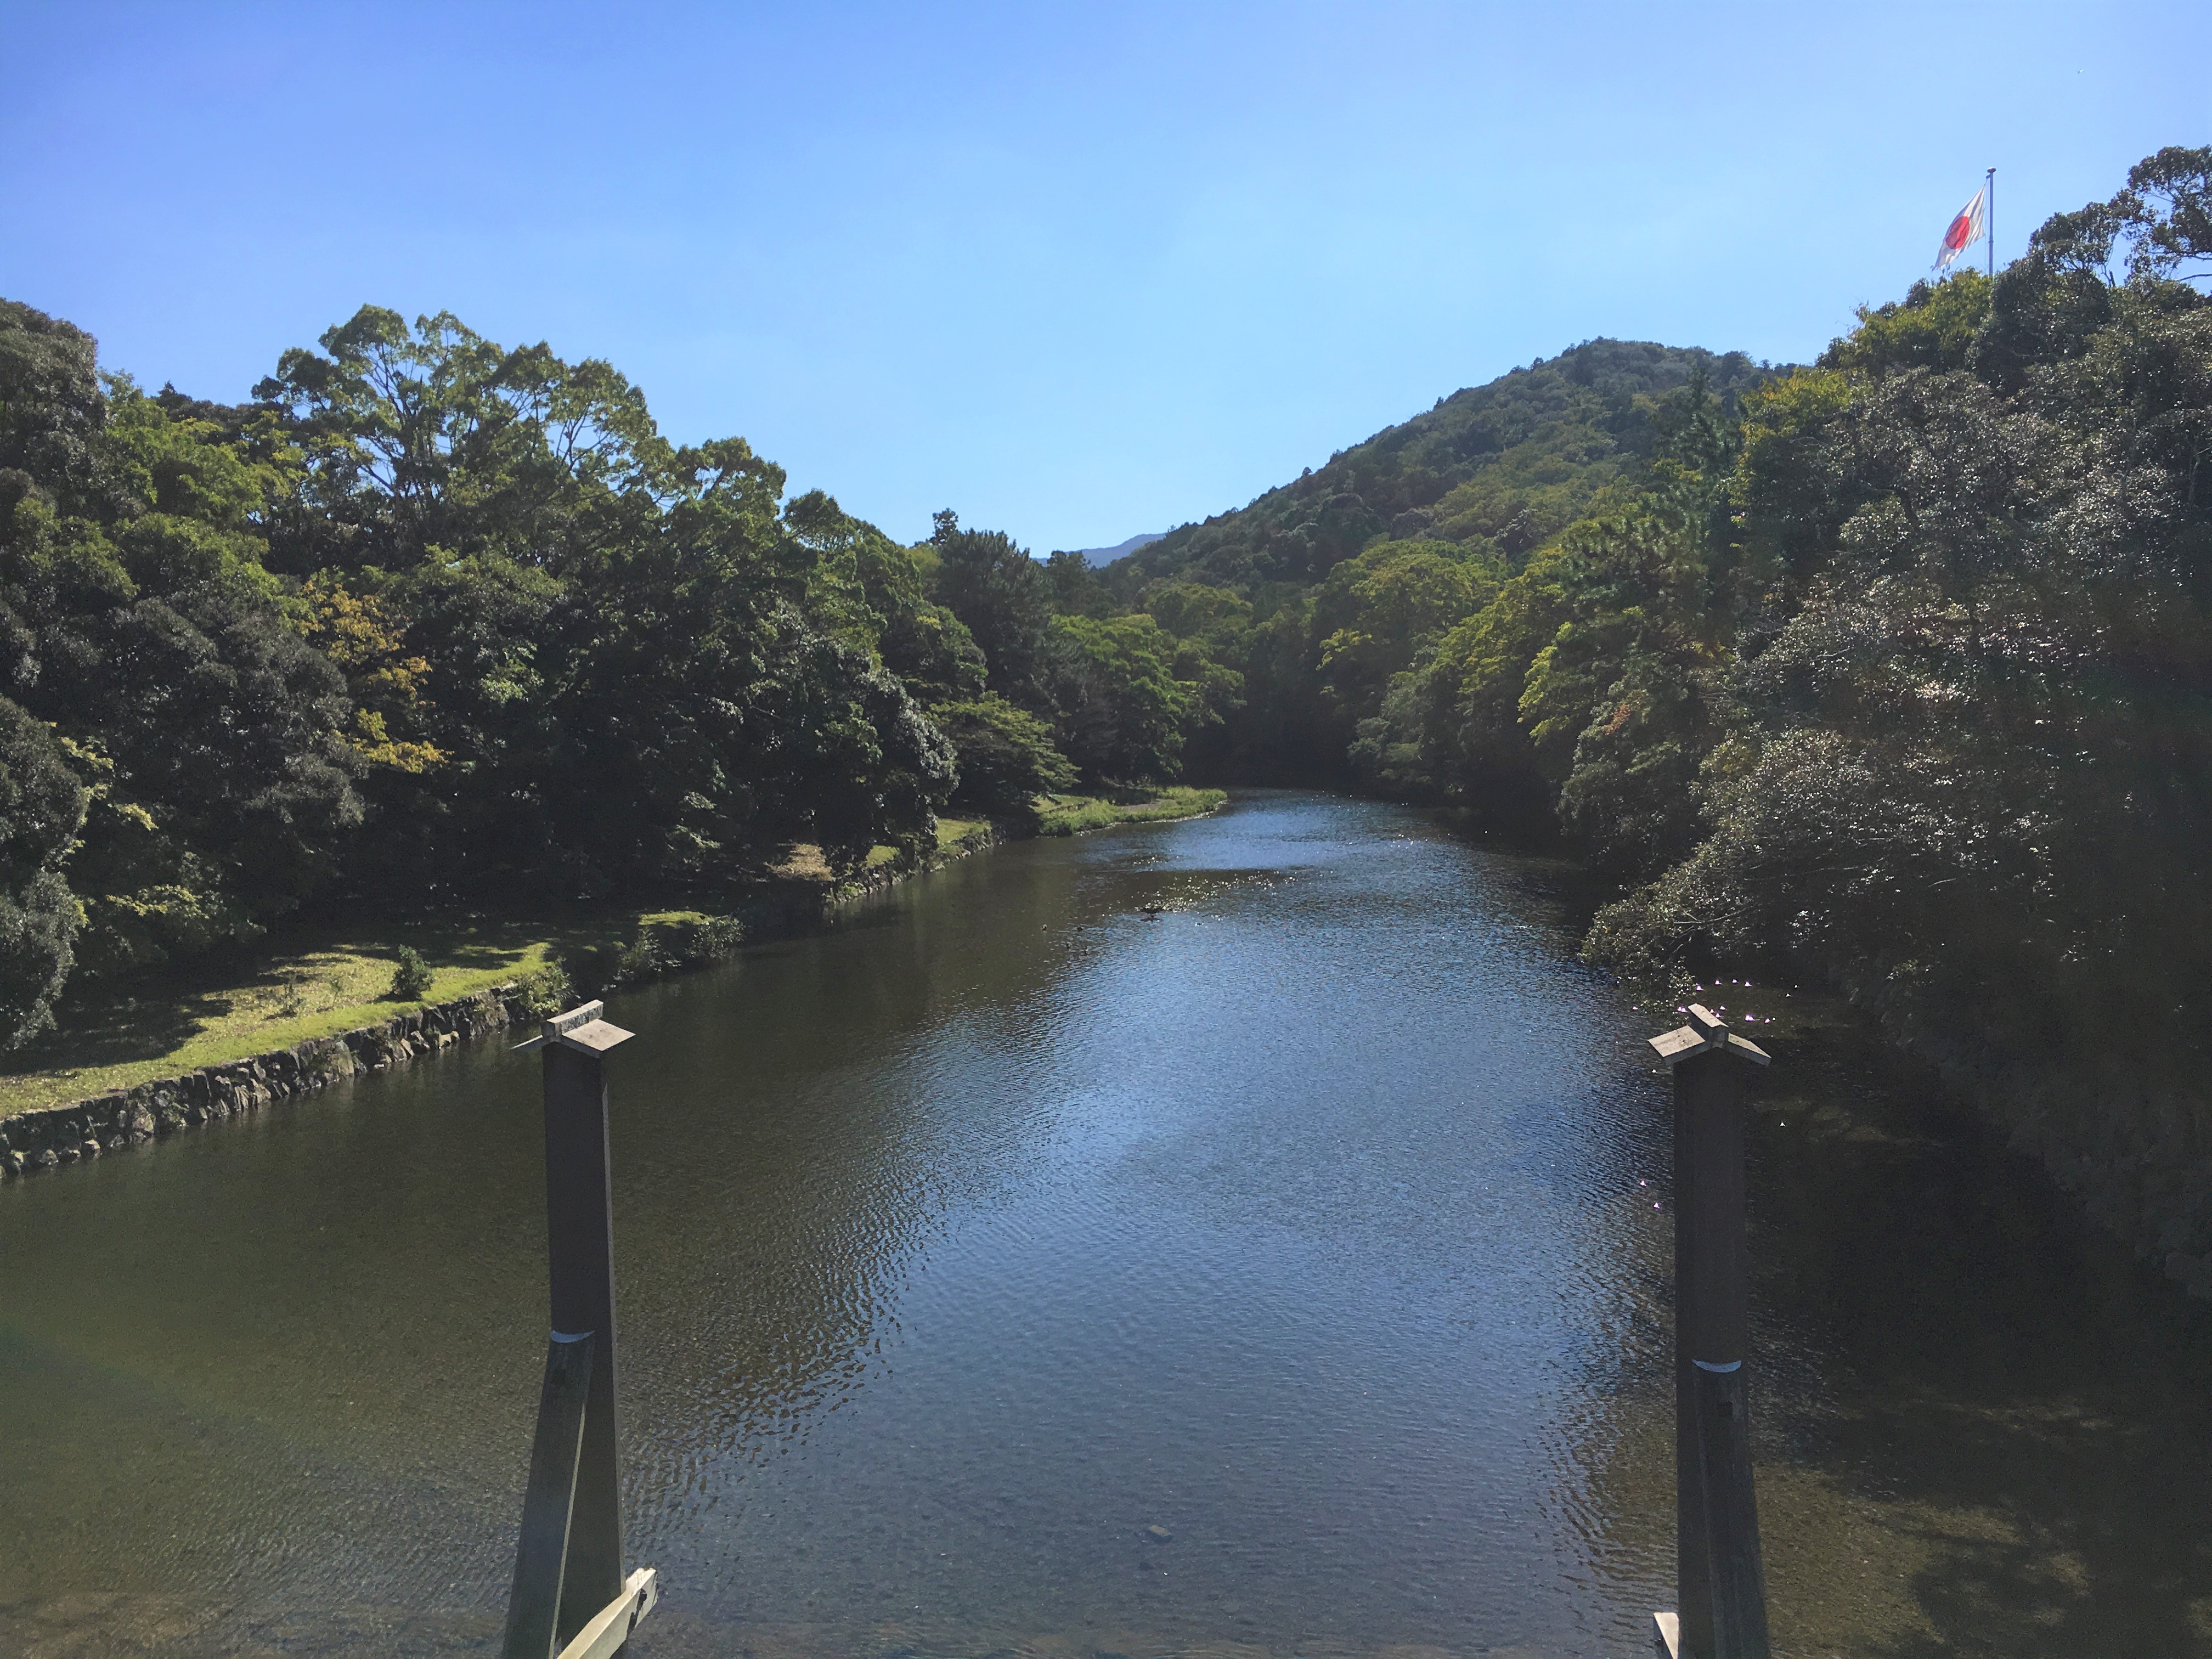 The Isuzugawa River near Ise jingus naiku on a sunny way with lush green trees